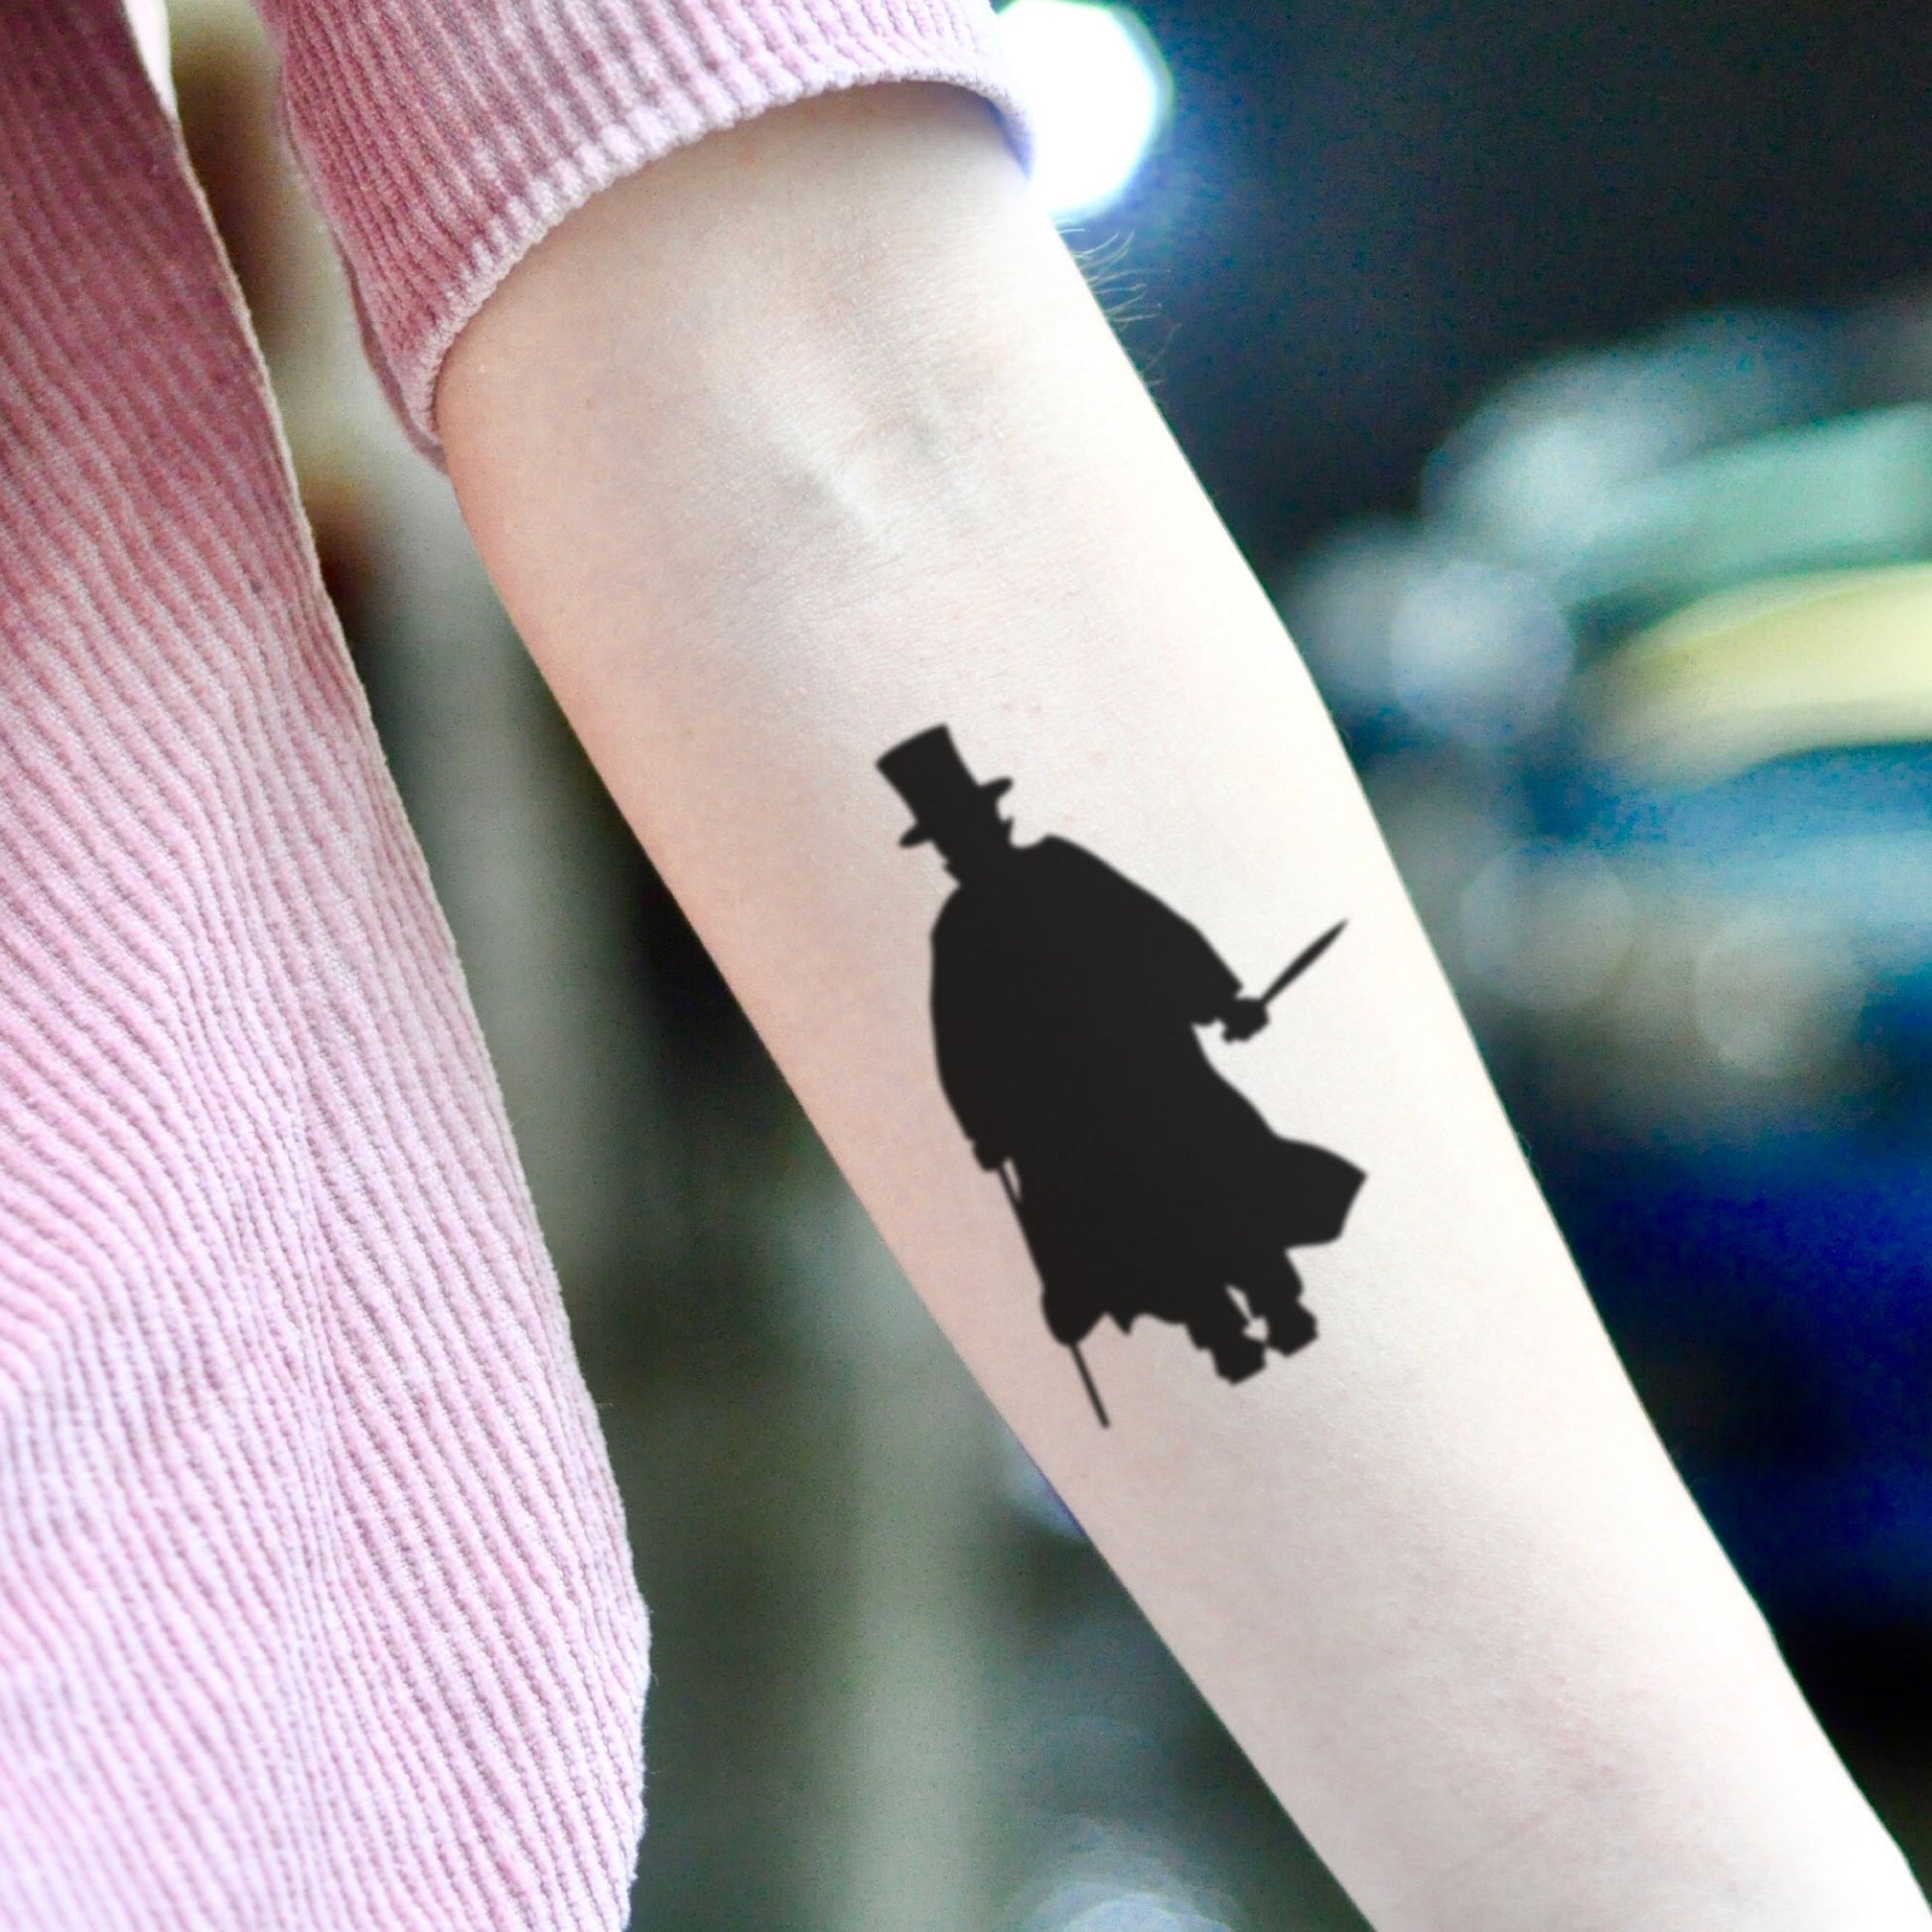 fake small jack the ripper minimalist temporary tattoo sticker design idea on inner arm